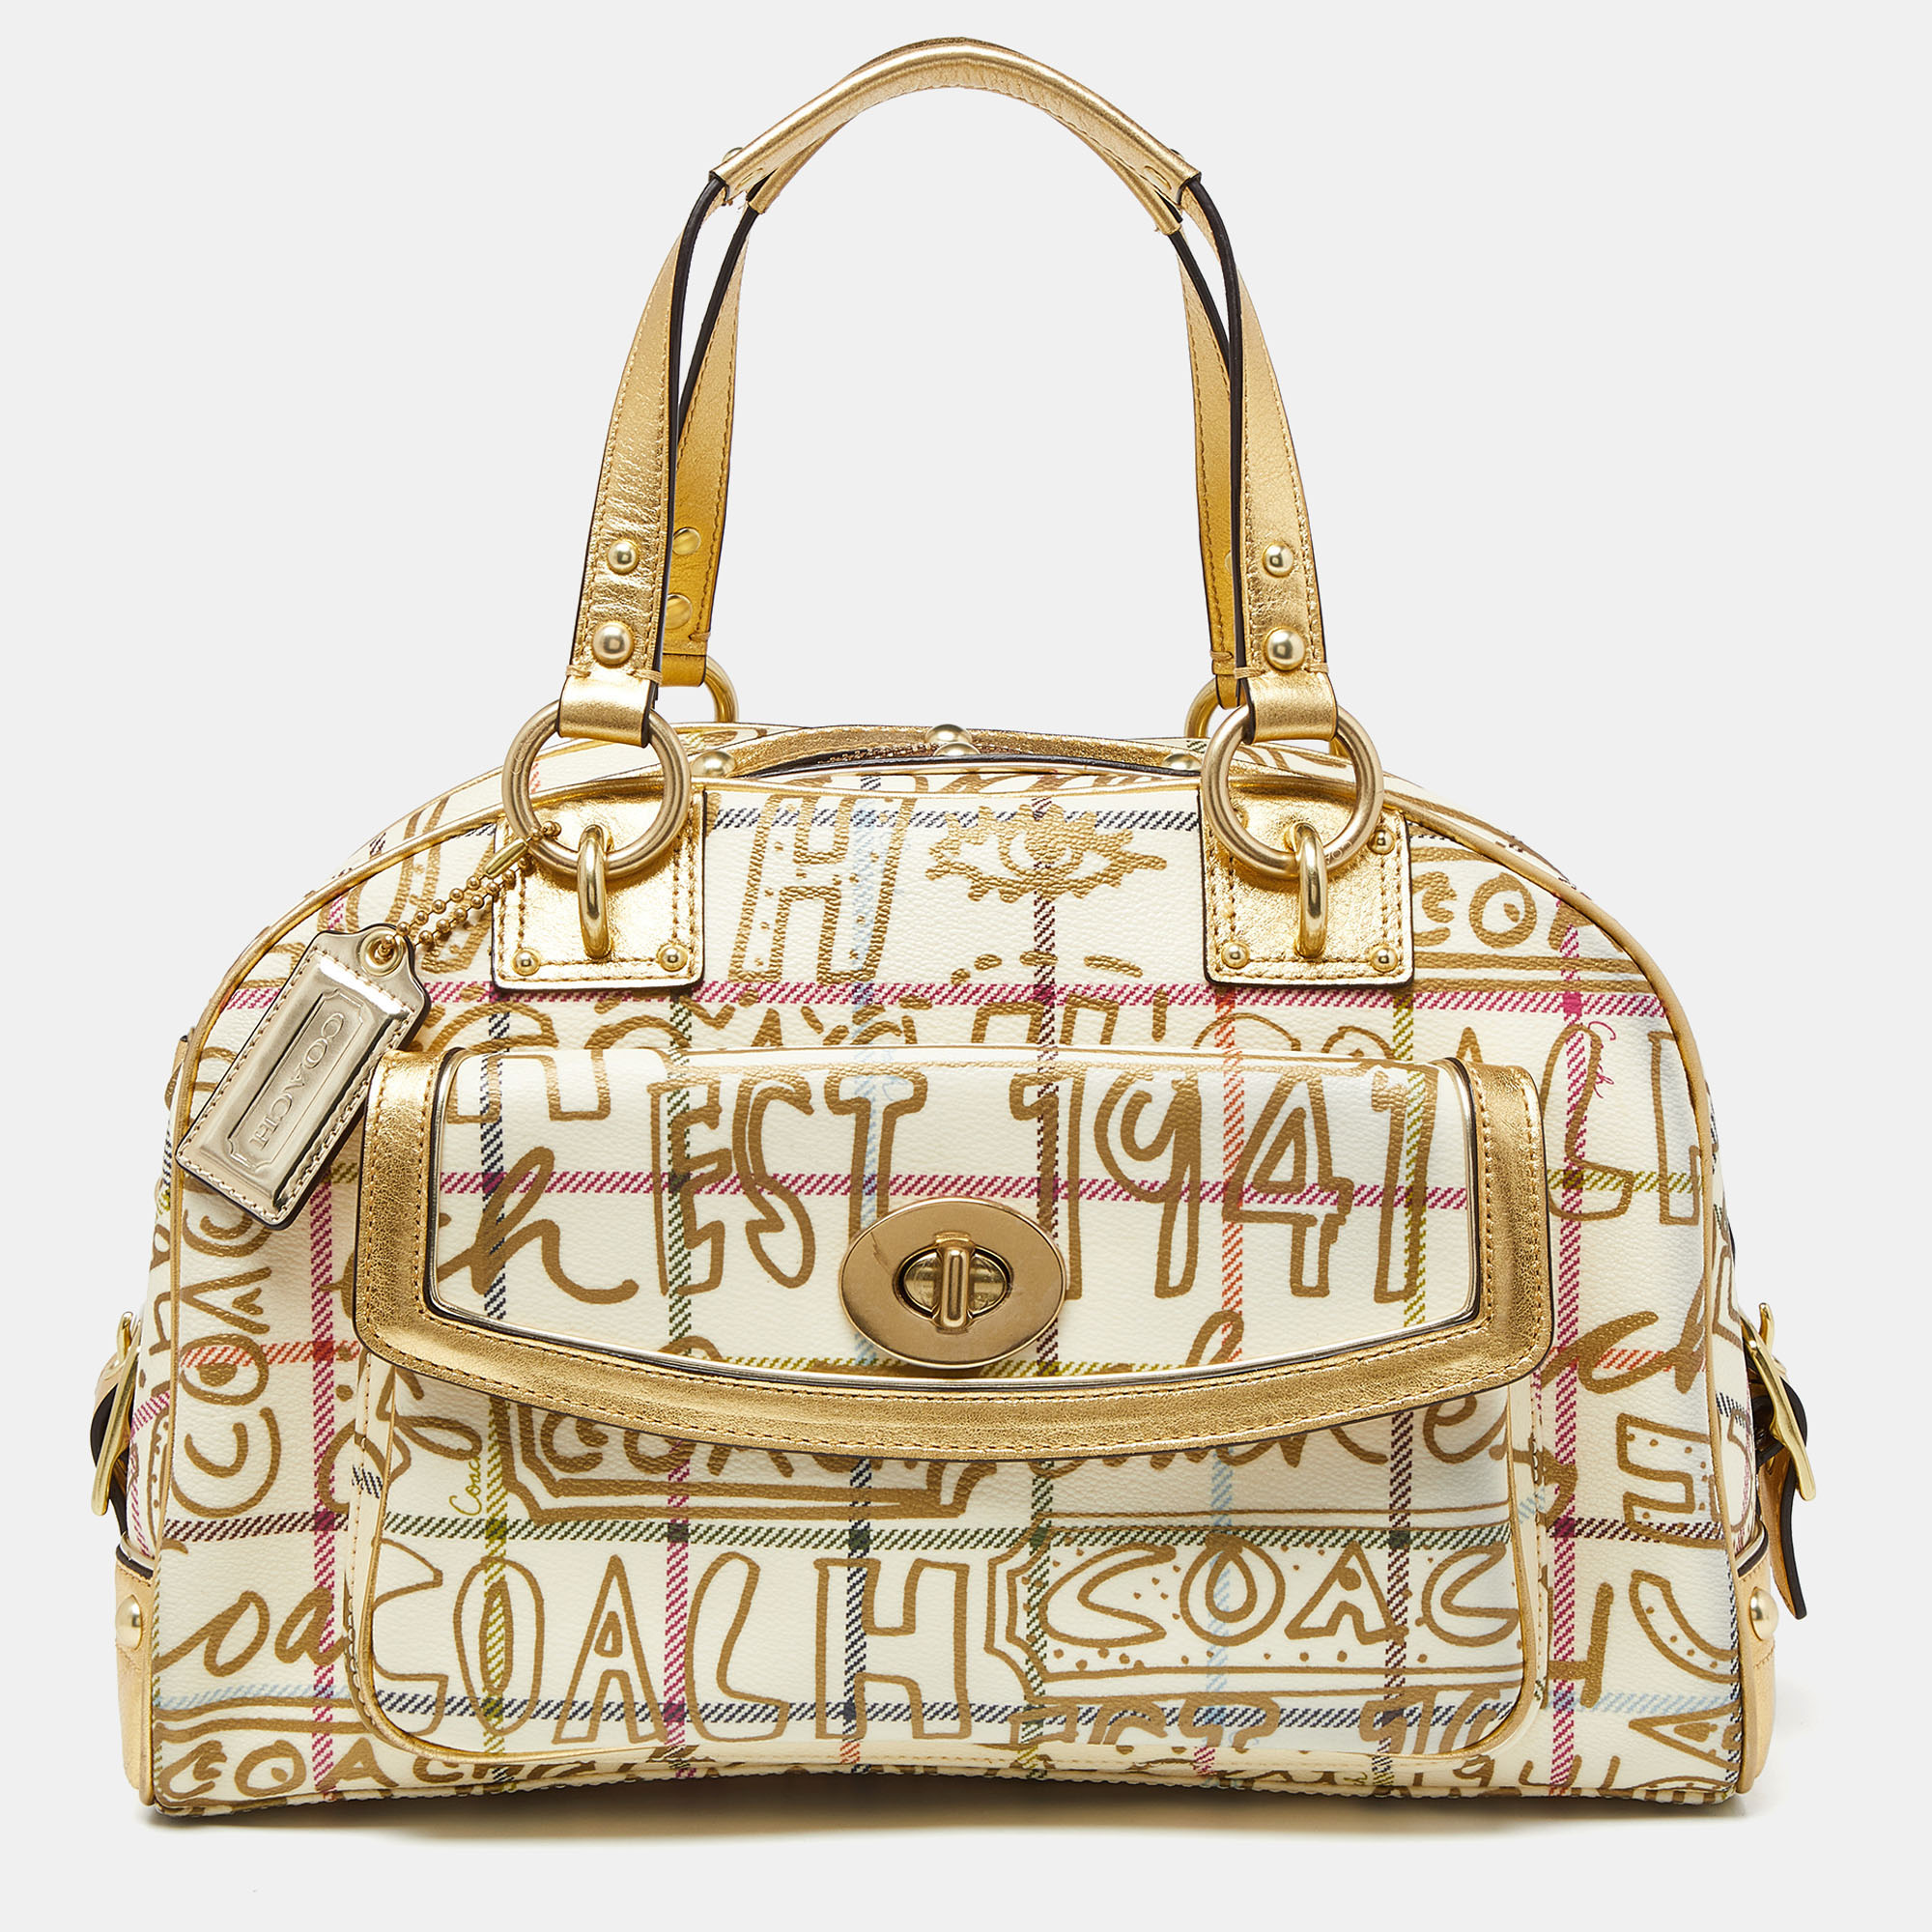 Coach gold pvc and leather graffiti tattersall satchel